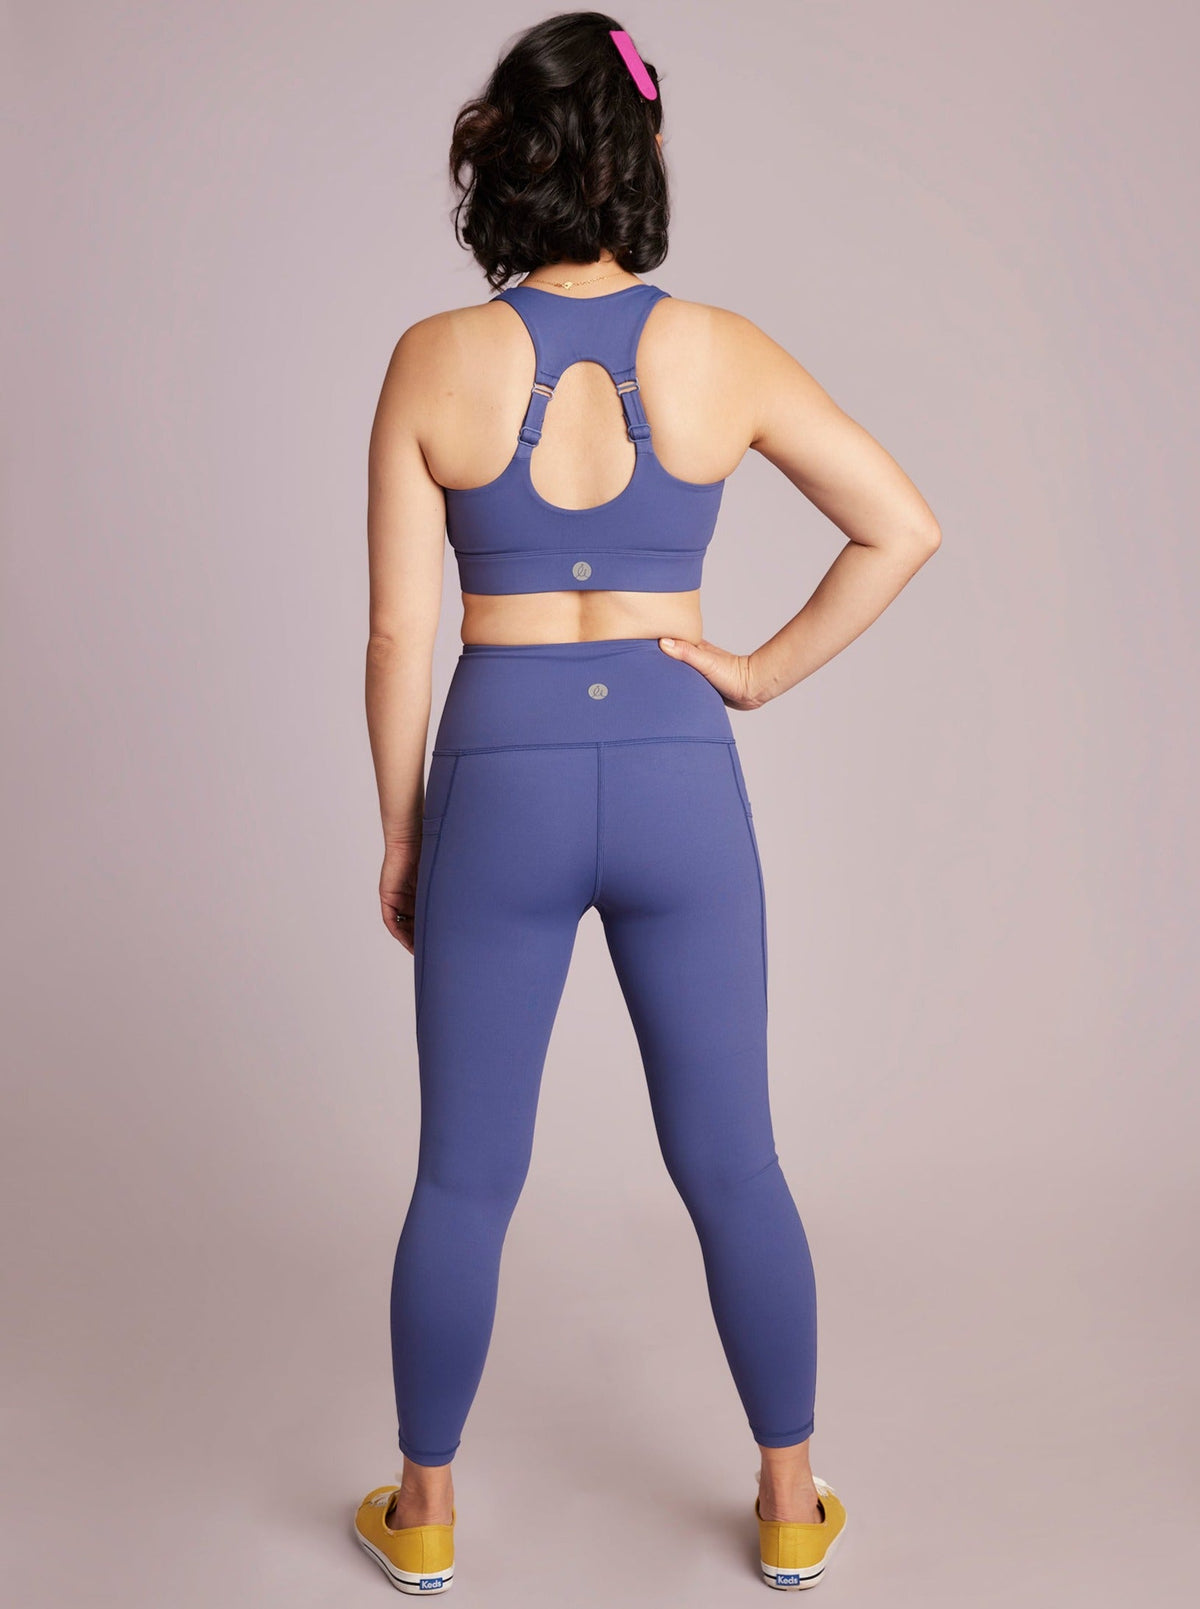 Indigo Blue Everyday Legging - 7/8 length - squat proof gym leggings for petite women